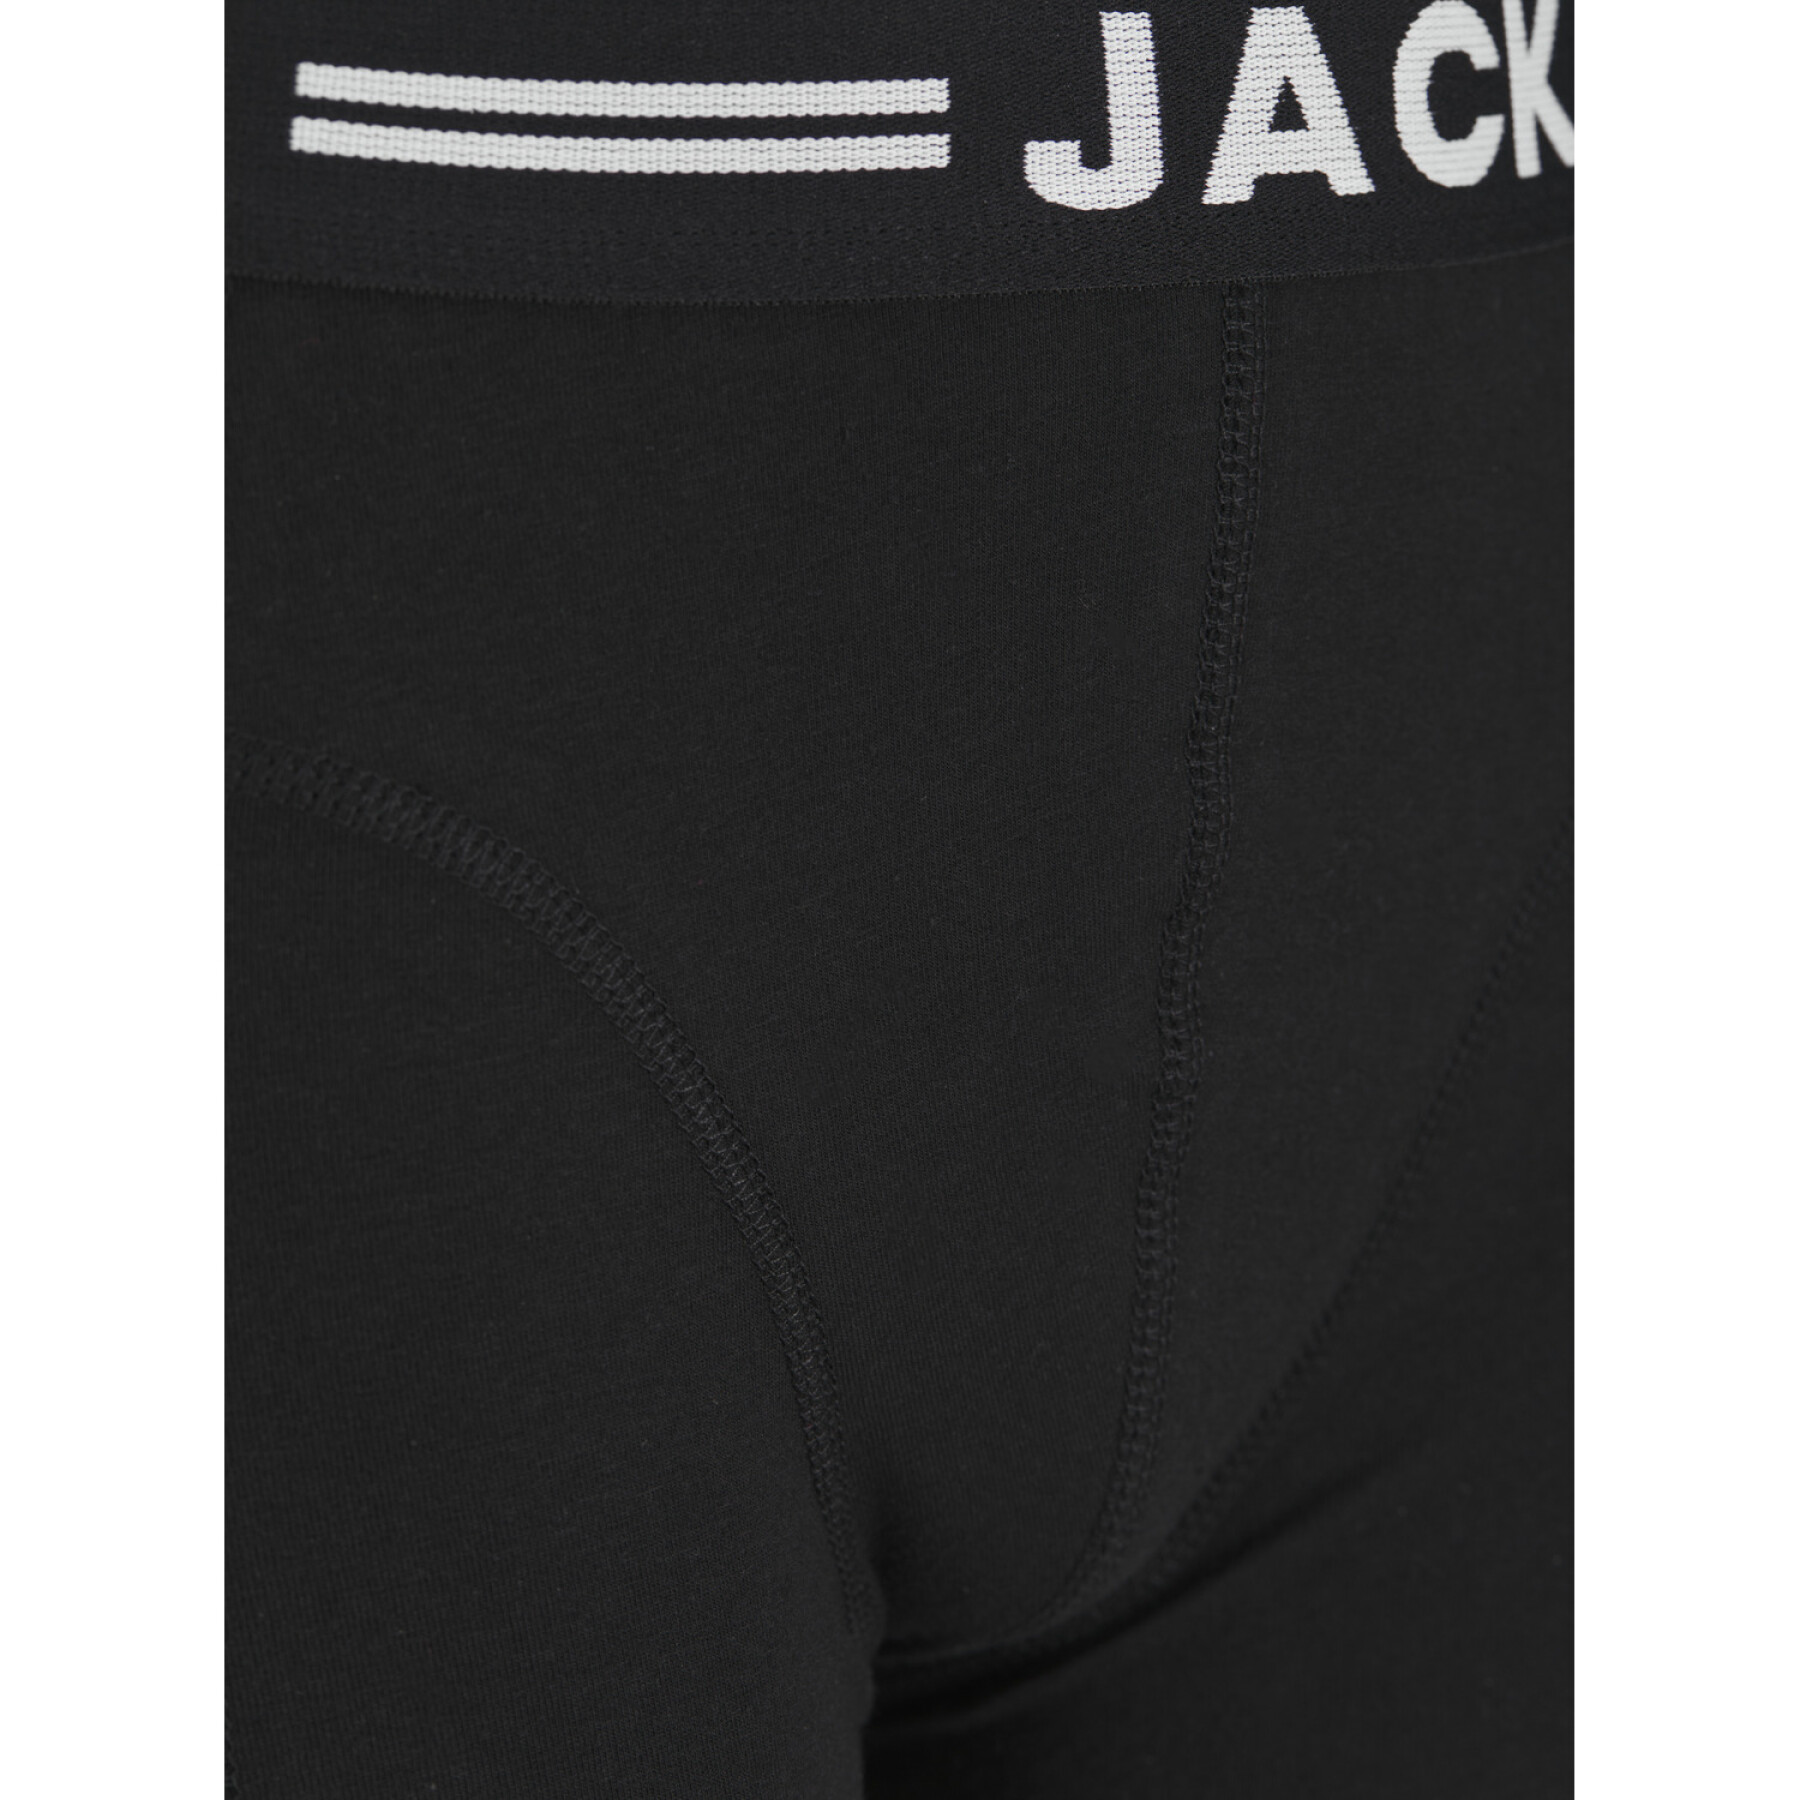 Baby boy boxer shorts Jack & Jones Sense Mini (x3)